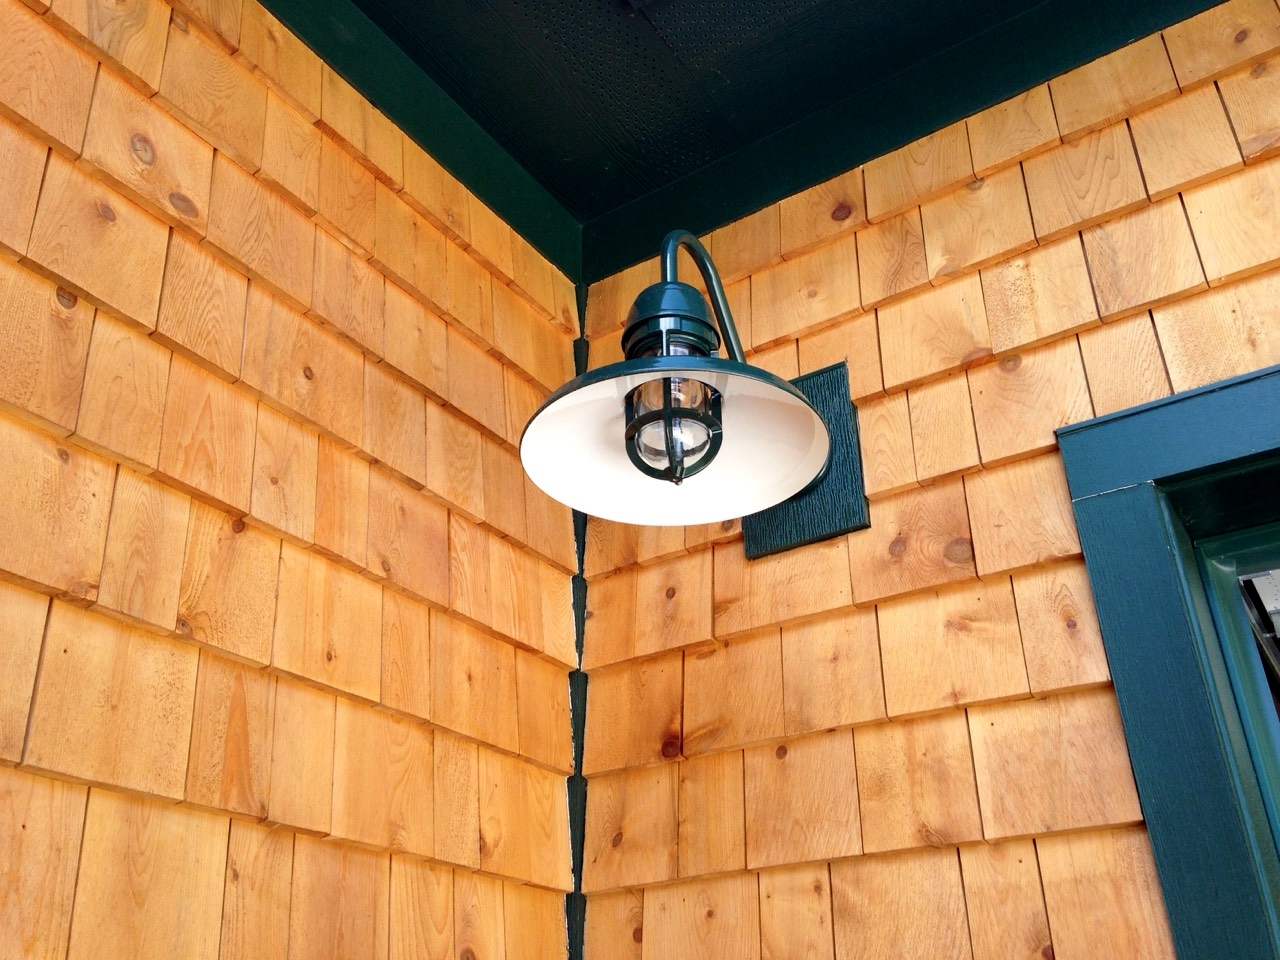 Gooseneck Barn Lighting For Rustic Mountain Home Inspiration Barn